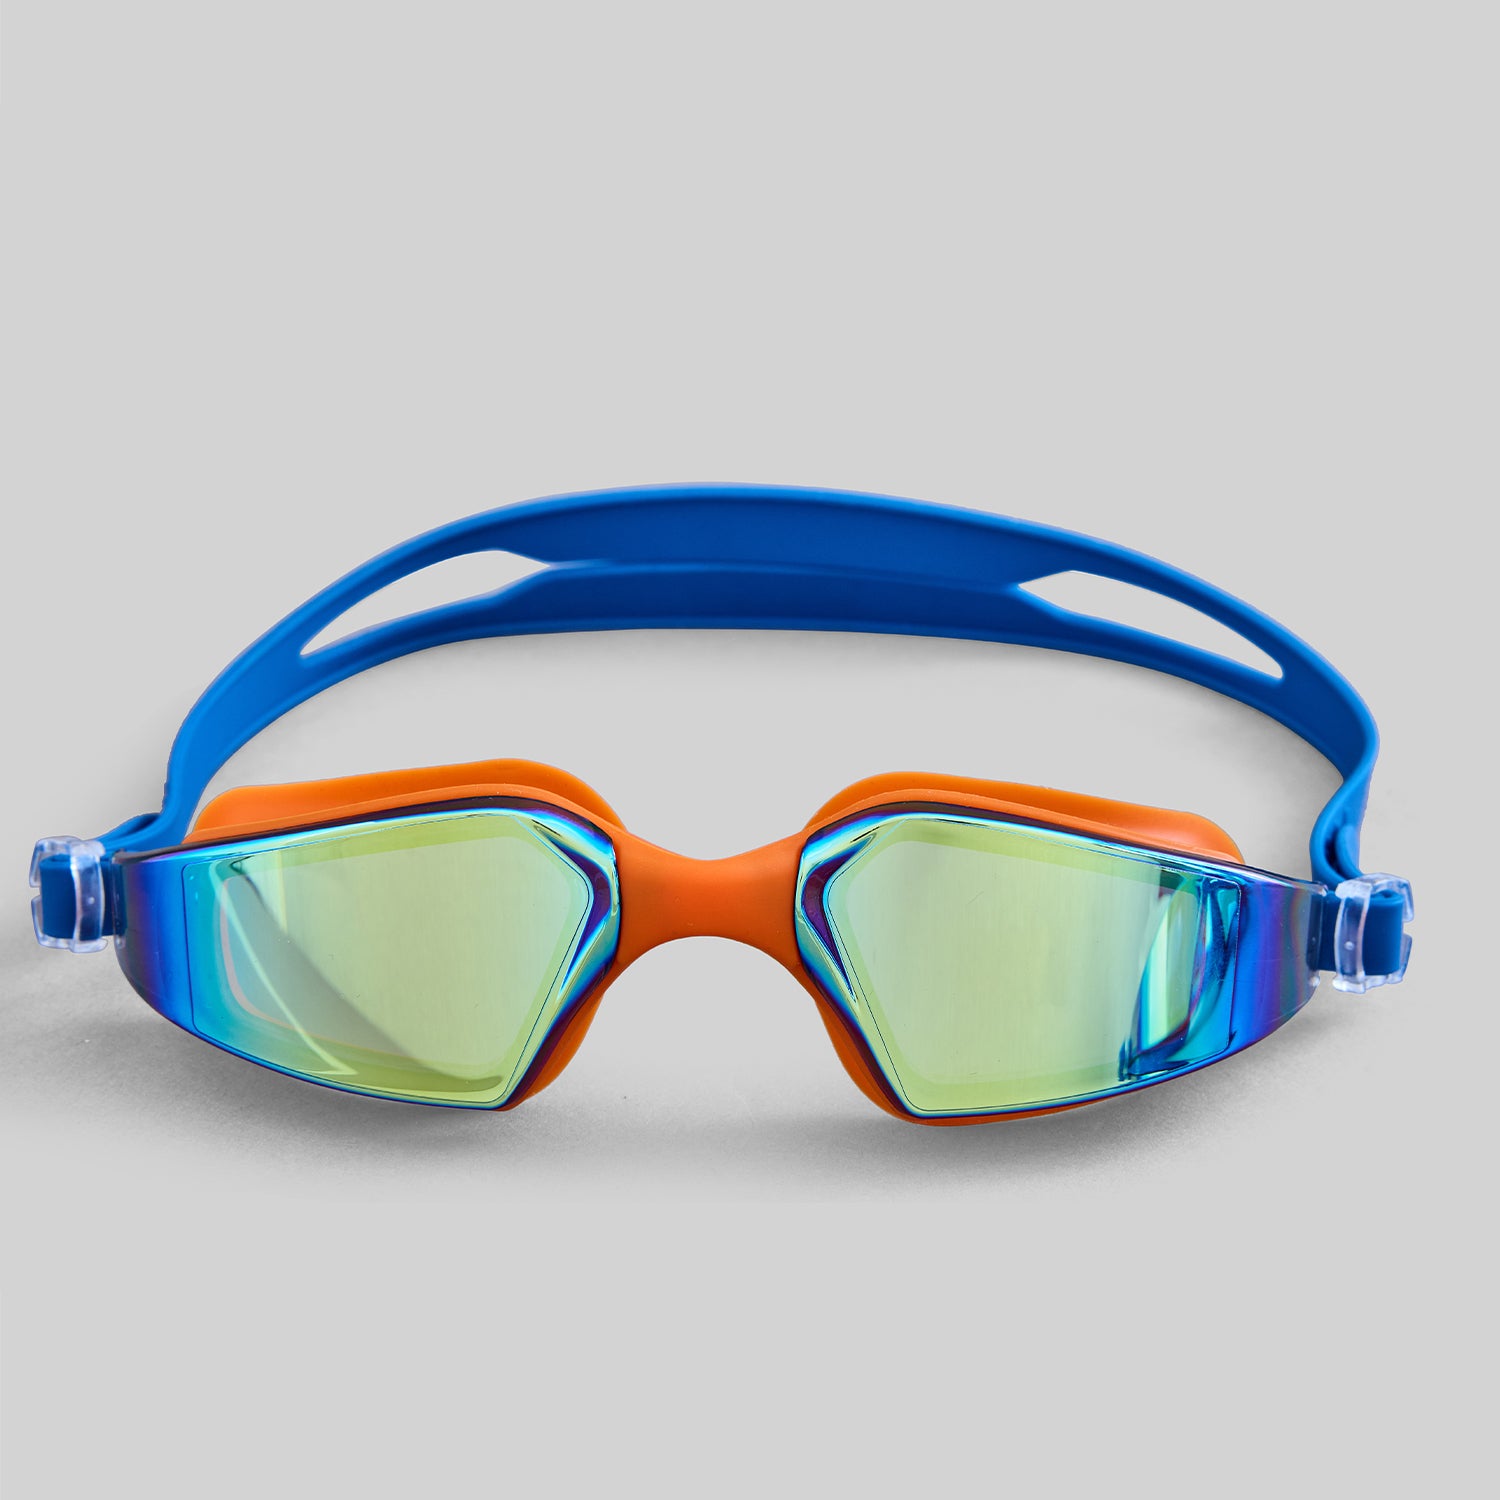 Official MI Merch - Swimming Goggles